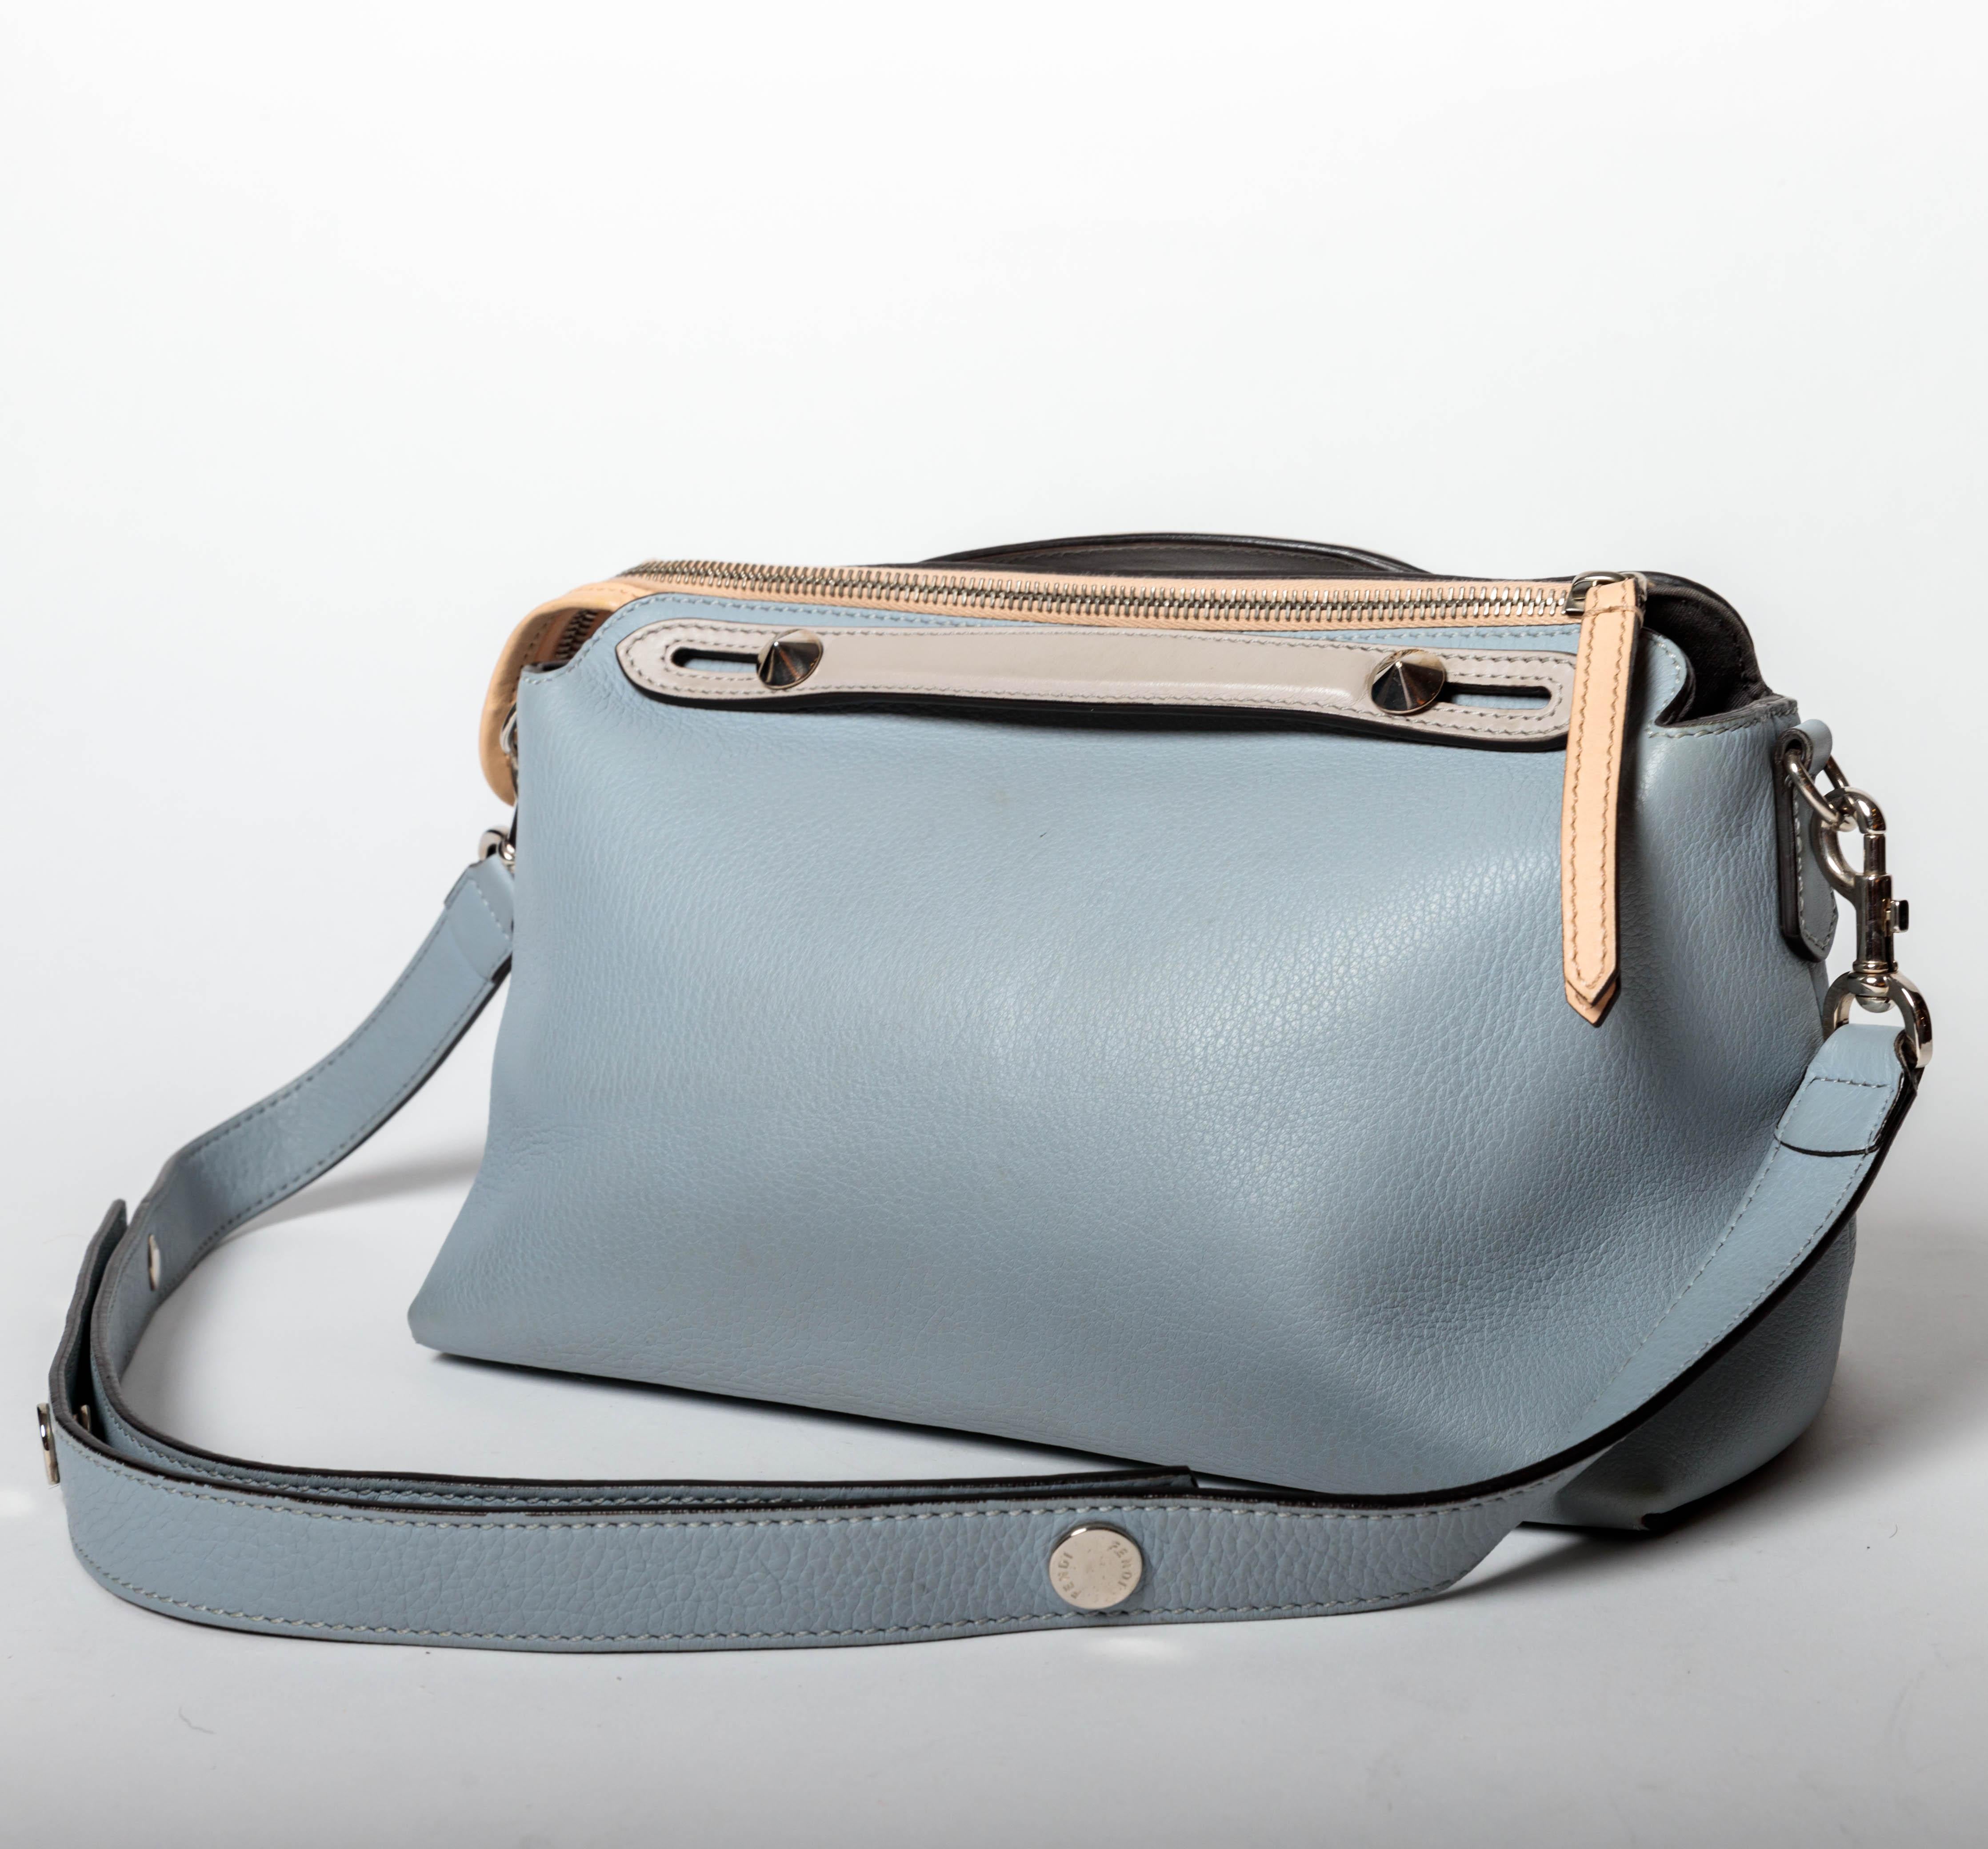 Fendi Top Handle Ice Blue Leather Bag with Detachable Shoulder Strap  For Sale 1